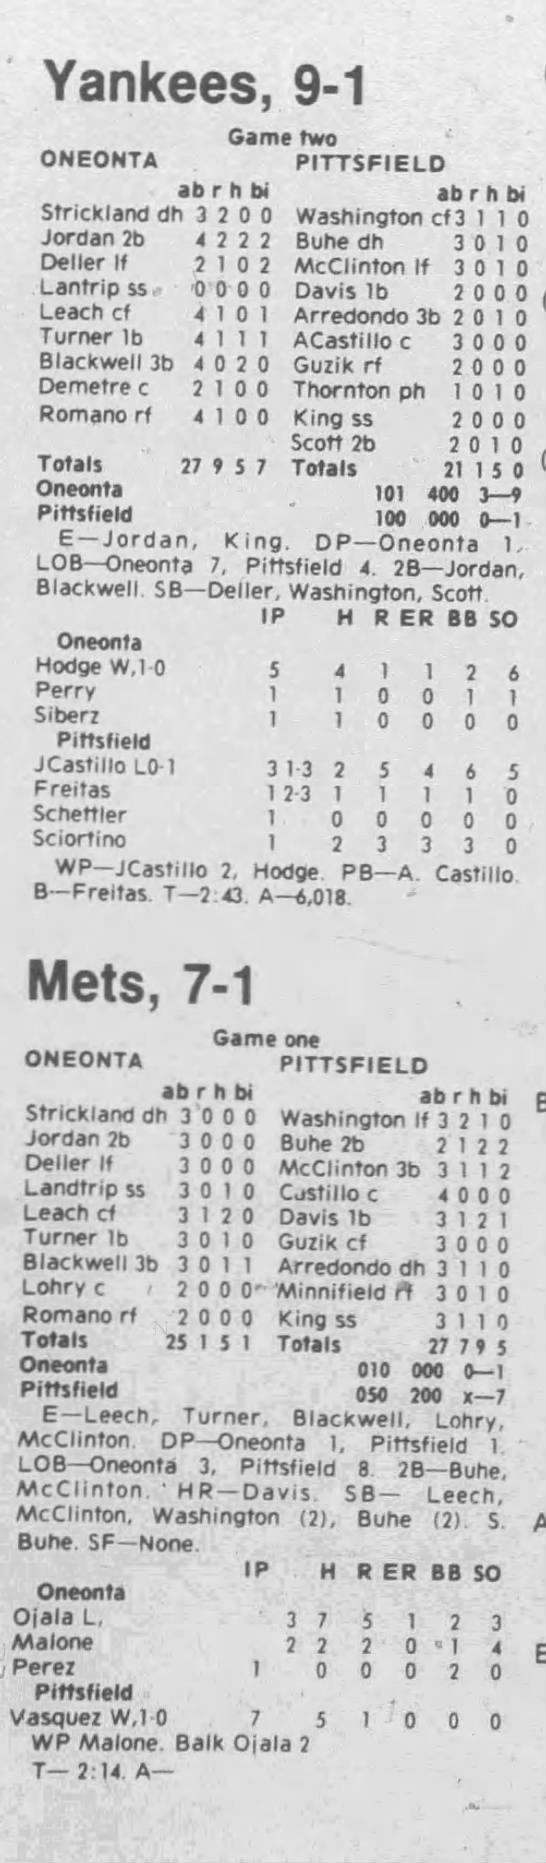 Pittsfield Mets - June 21, 1990 - 